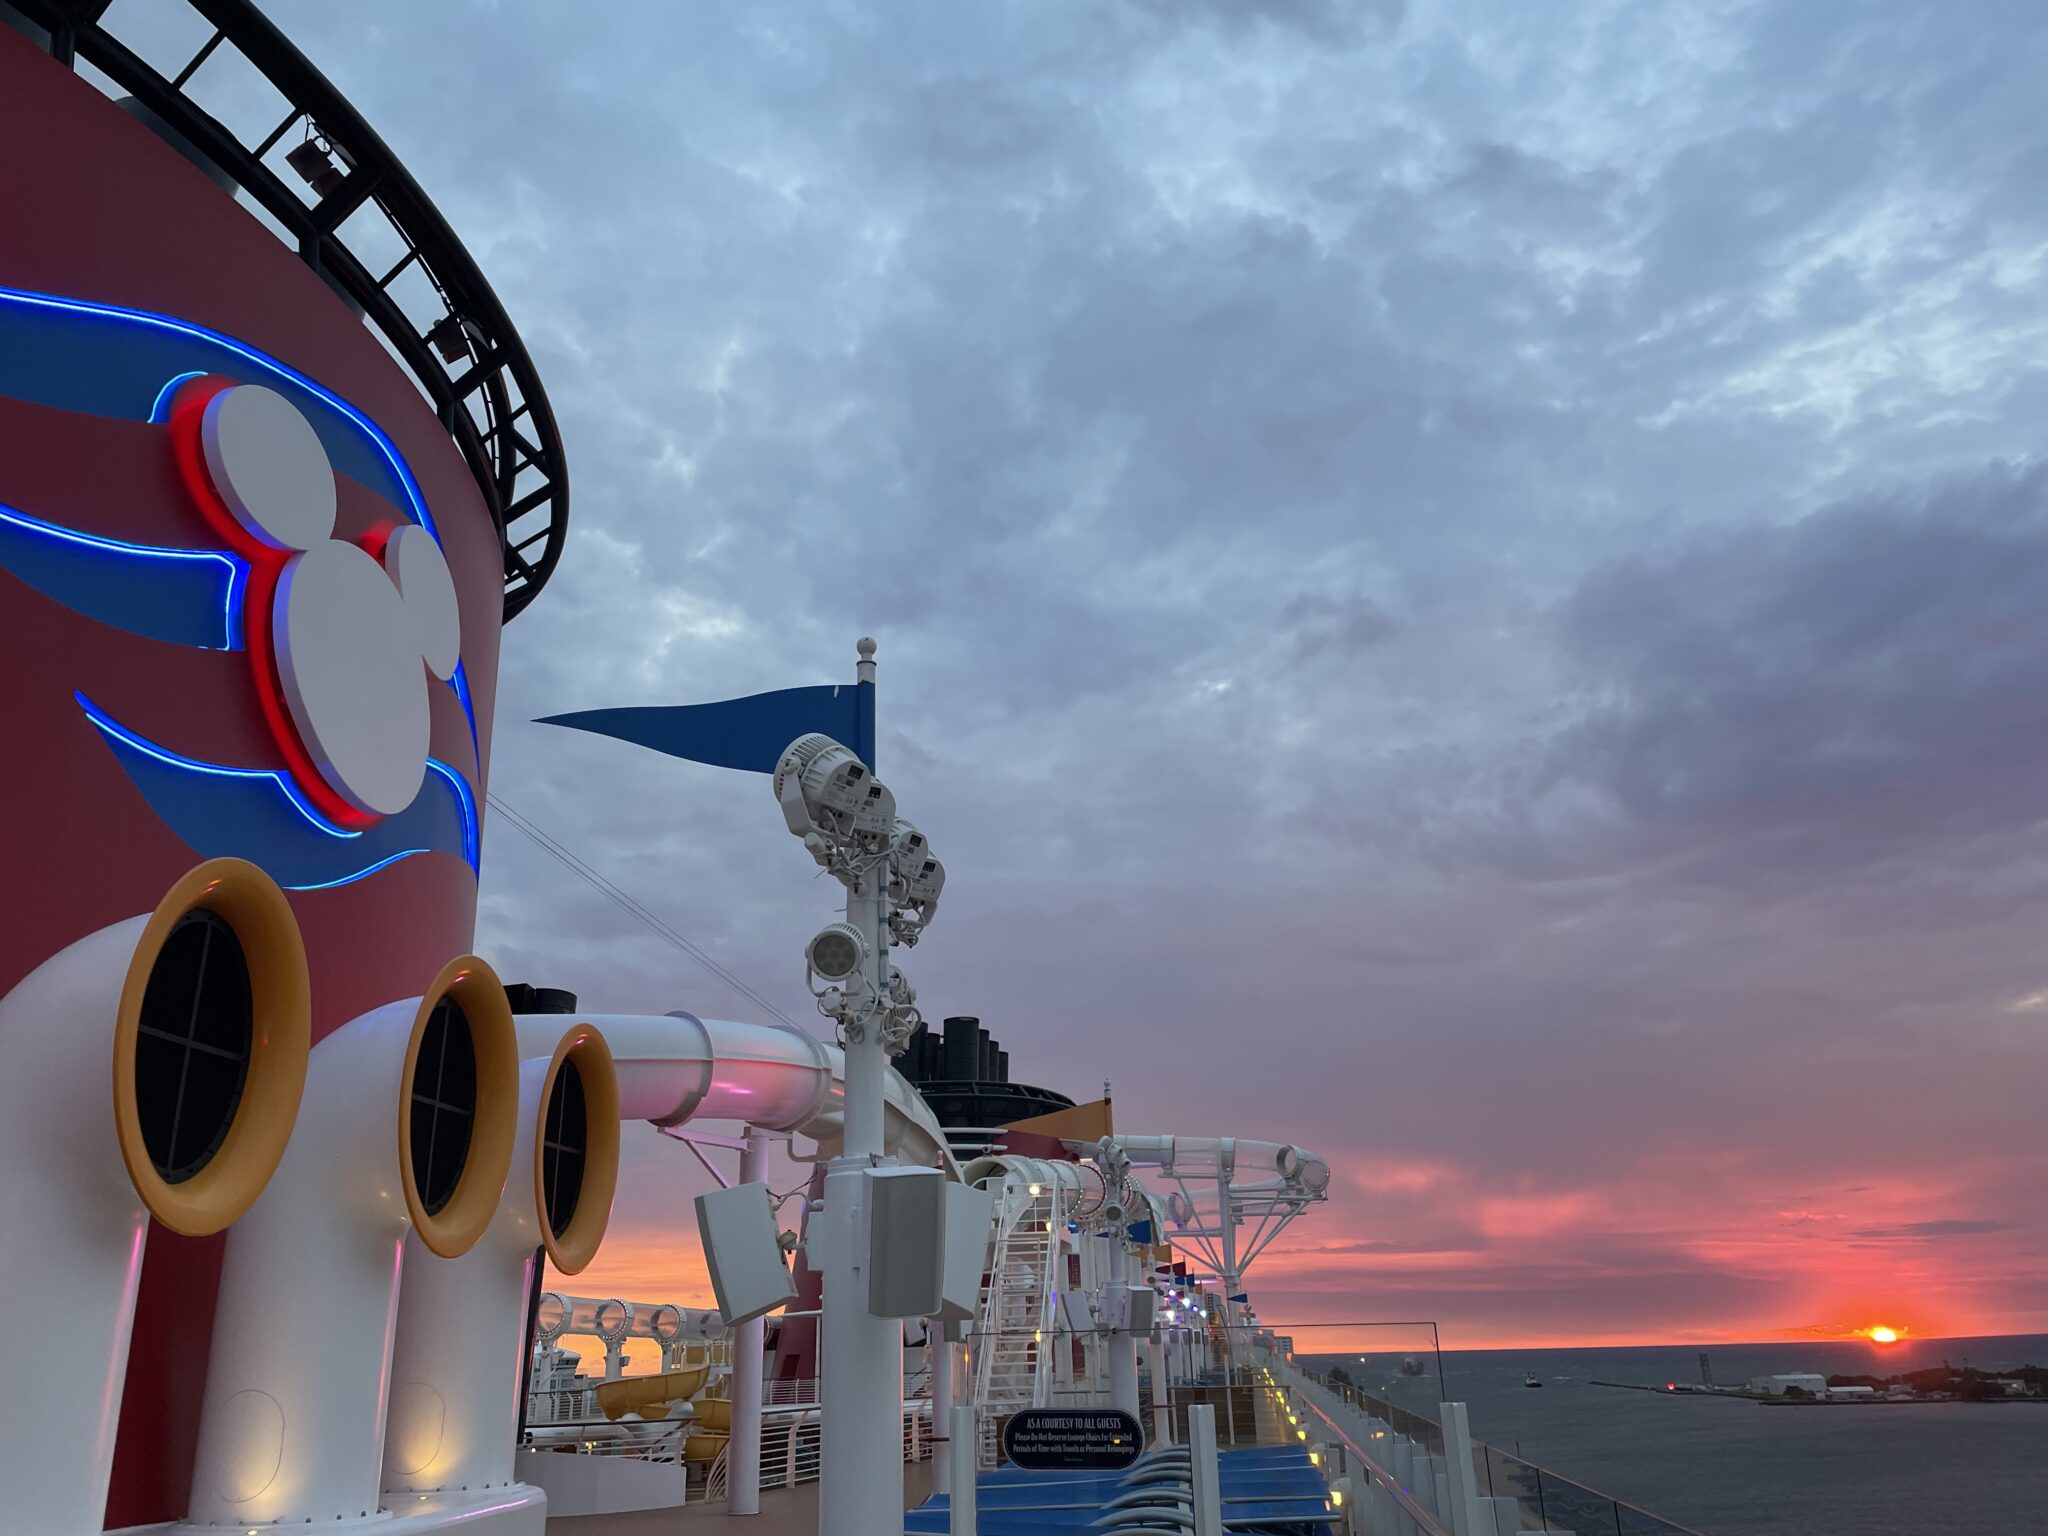 Disney Dream Cruise: A New Port & Murder Rates in Nassau